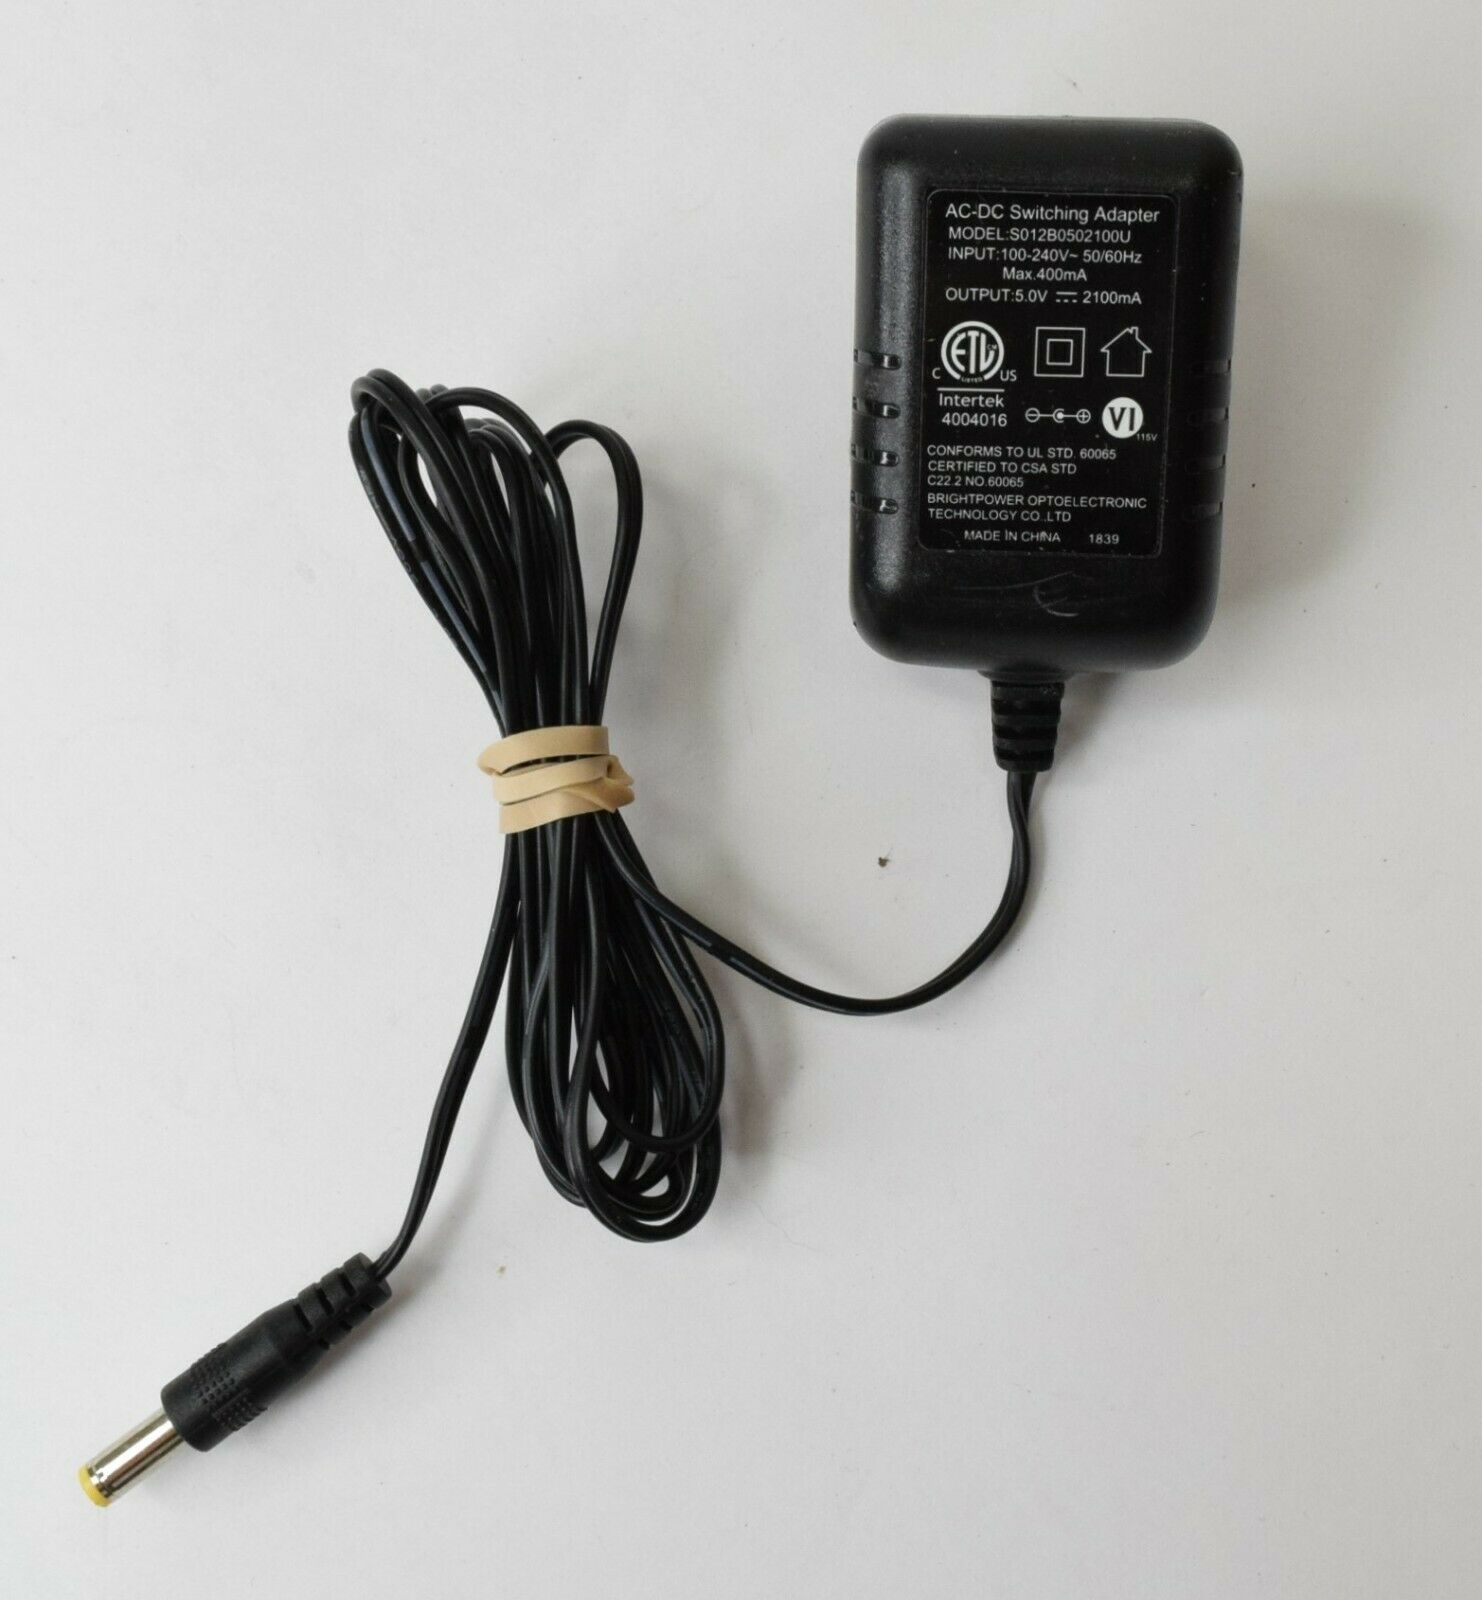 *Brand NEW* BrightPower AC/DC Switching Power Supply Adapter Unit S012B0502100U 5V 2100mA